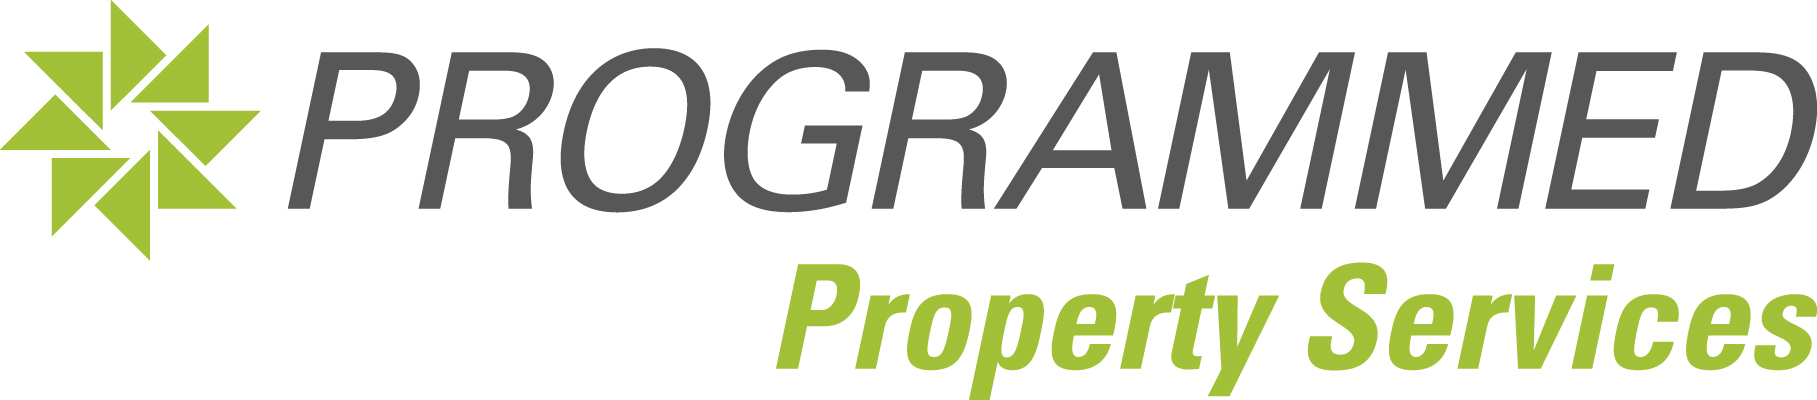 Programmed_Sub_Brands_Property_Services_Horizonal_Logo